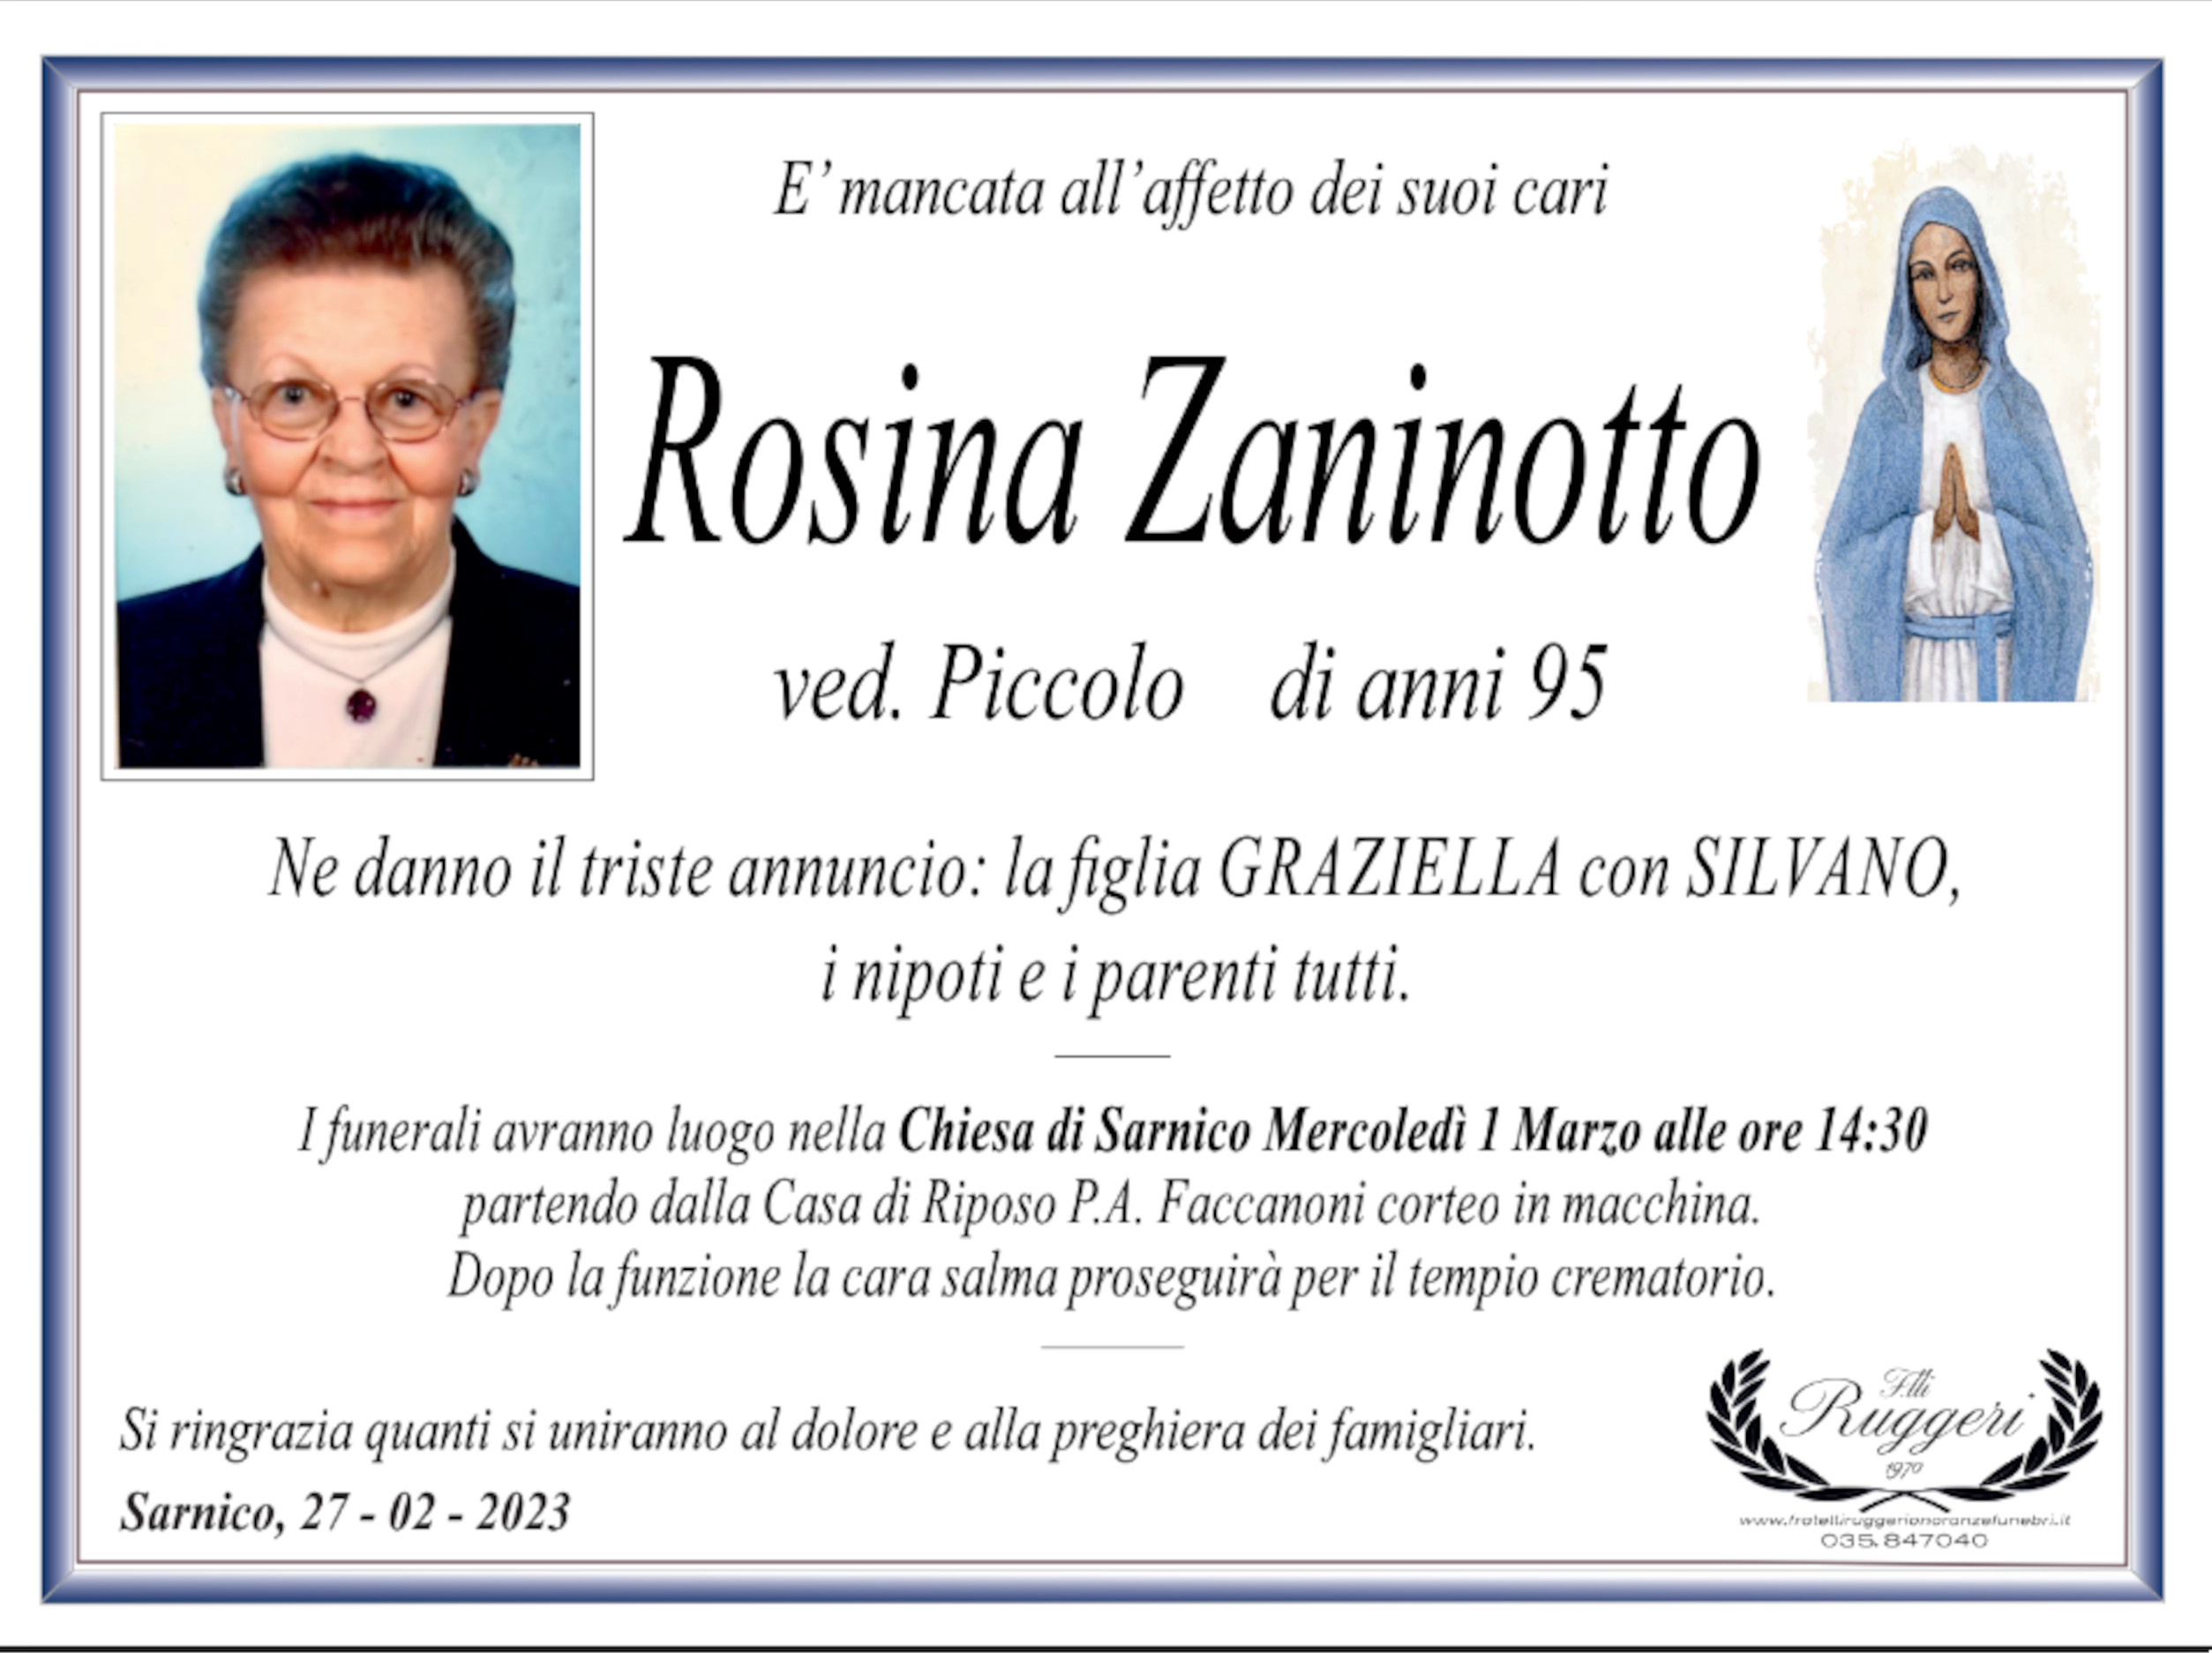 Rosina Zaninotto - Condoglianze Online F.lli Ruggeri